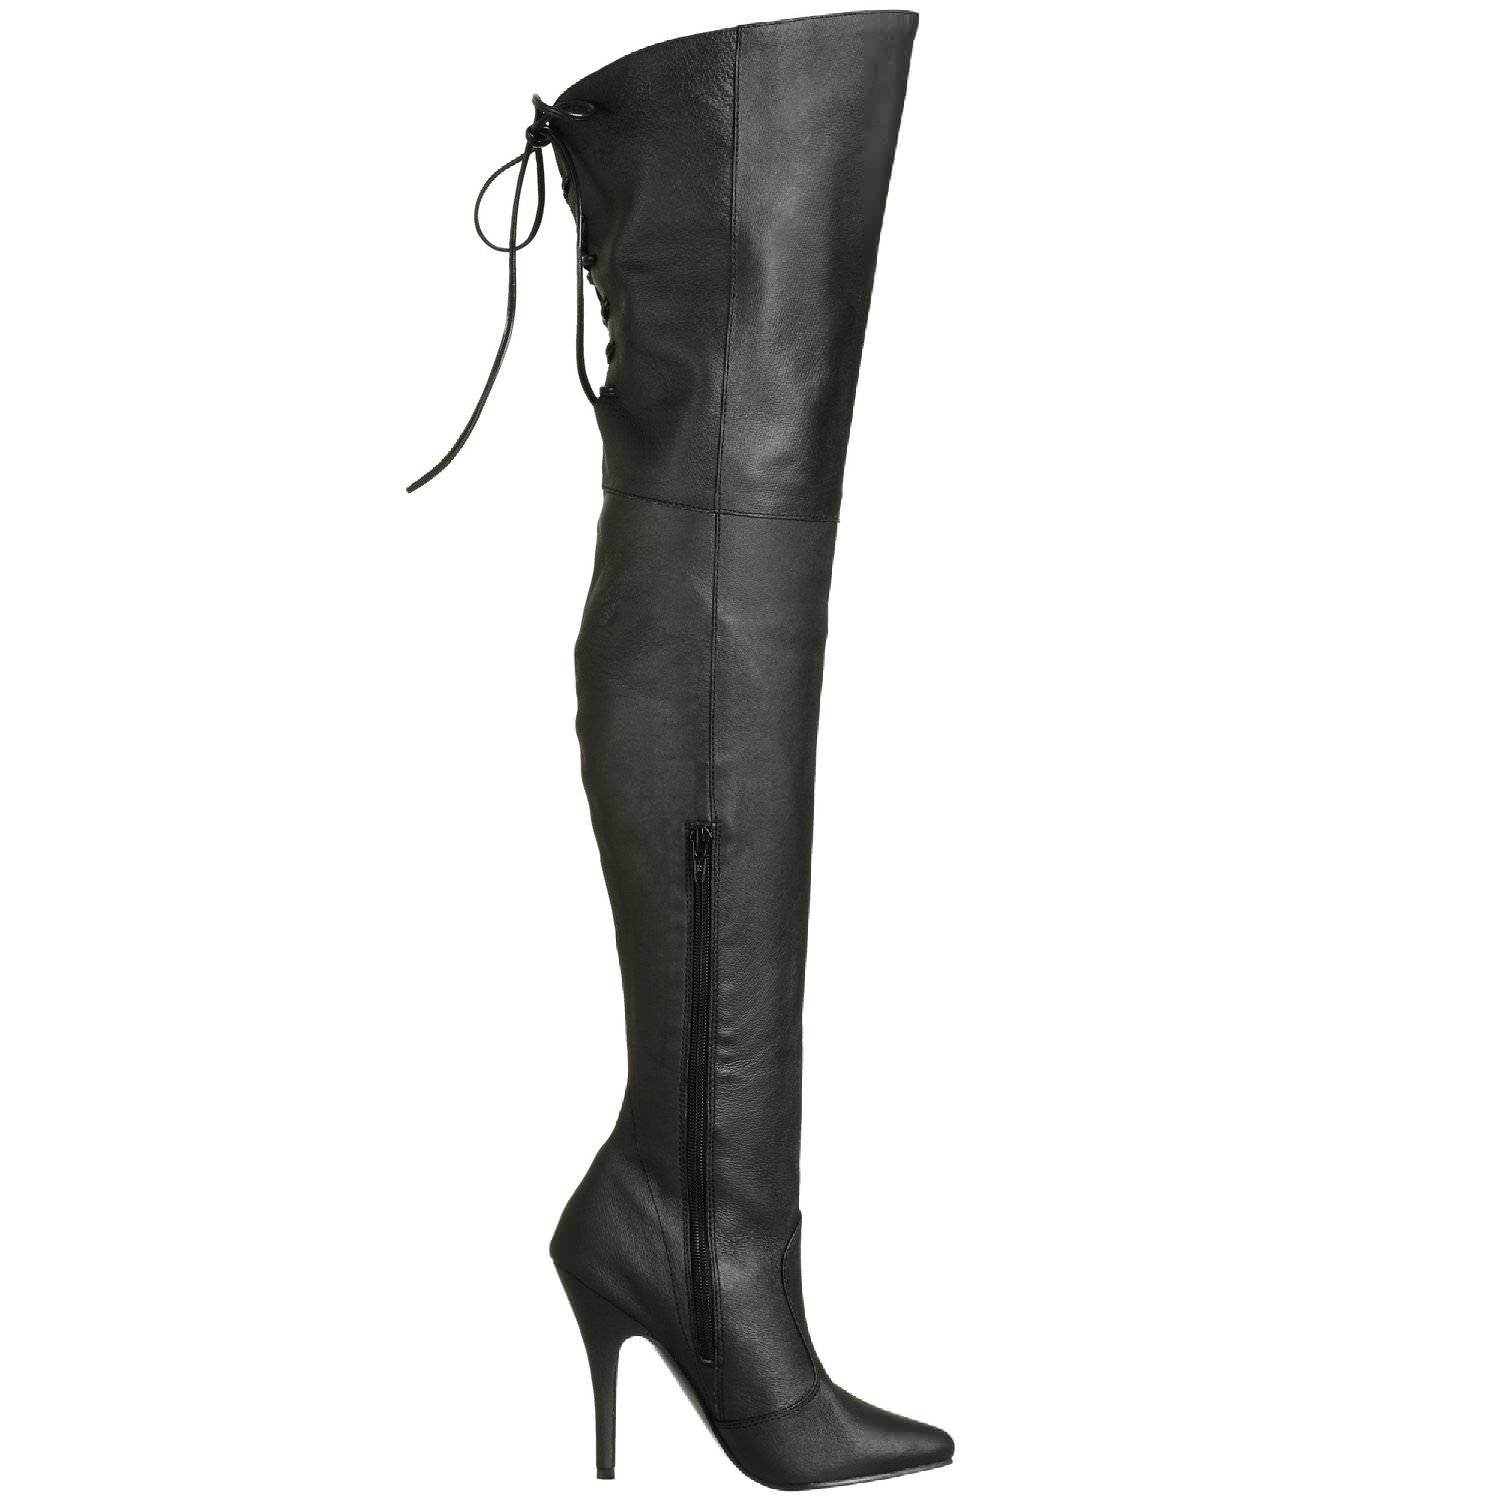 Unbetitelt | Celebrity boots, Womens high boots, Leather thigh high boots